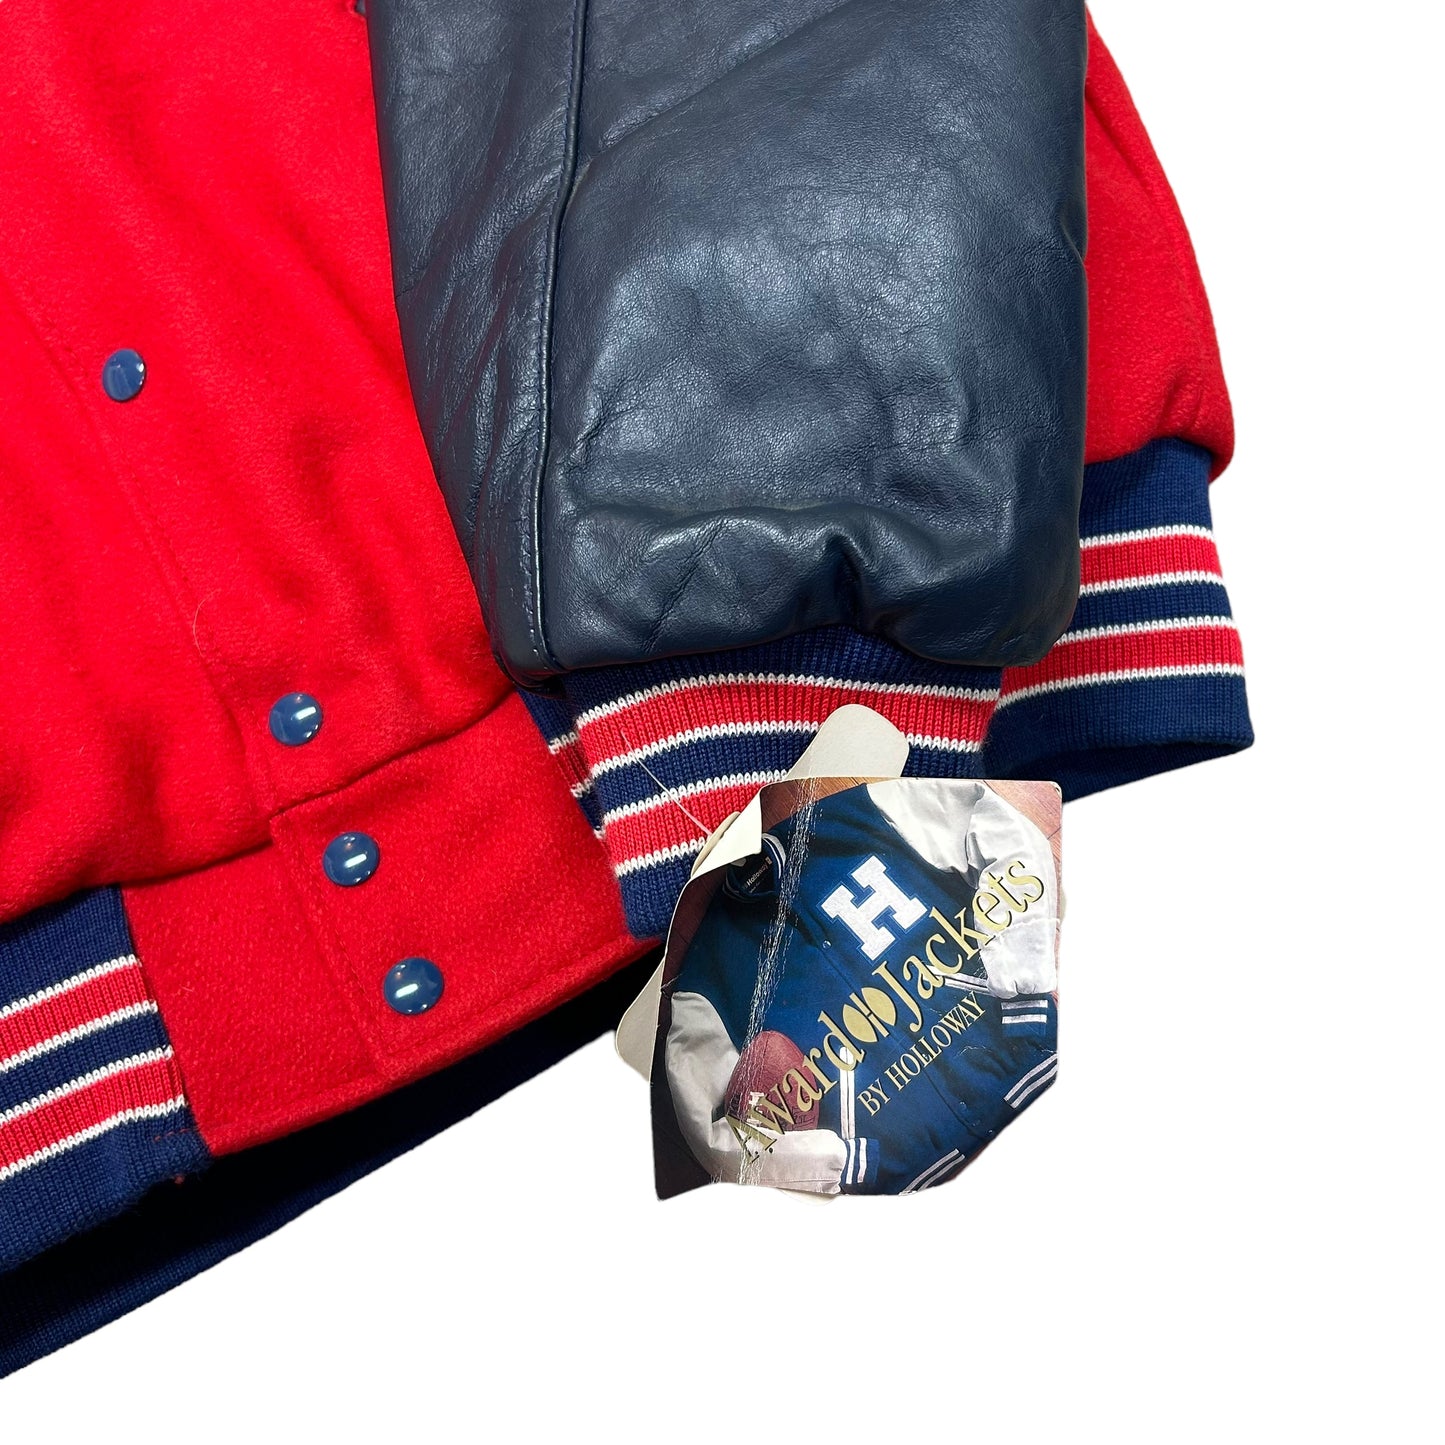 NWT Vintage 1990s Holloway Navy Blue/Red Leather & Wool Varsity Jacket - Size XL (Fits L/XL)